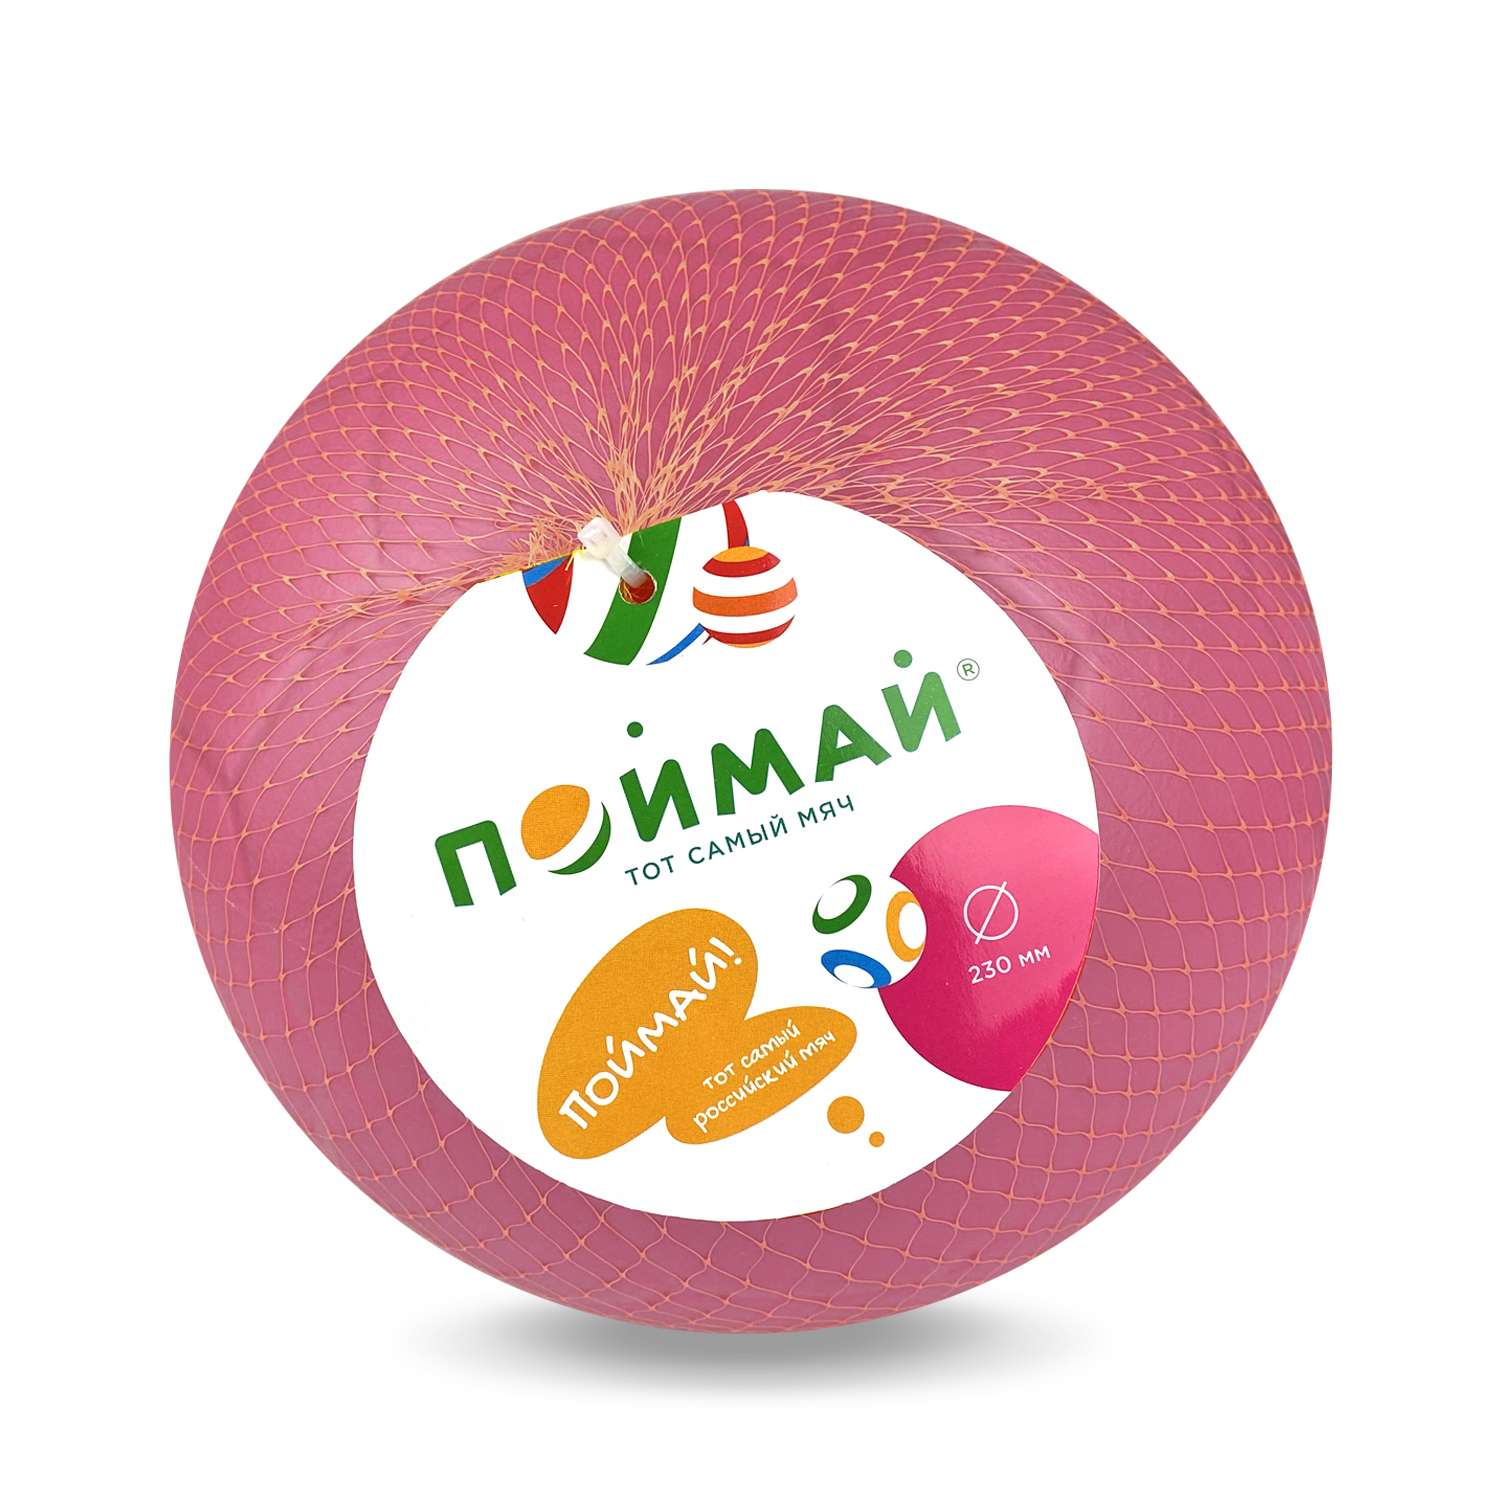 Мяч ПОЙМАЙ диаметр 230мм Футбол розовый - фото 2